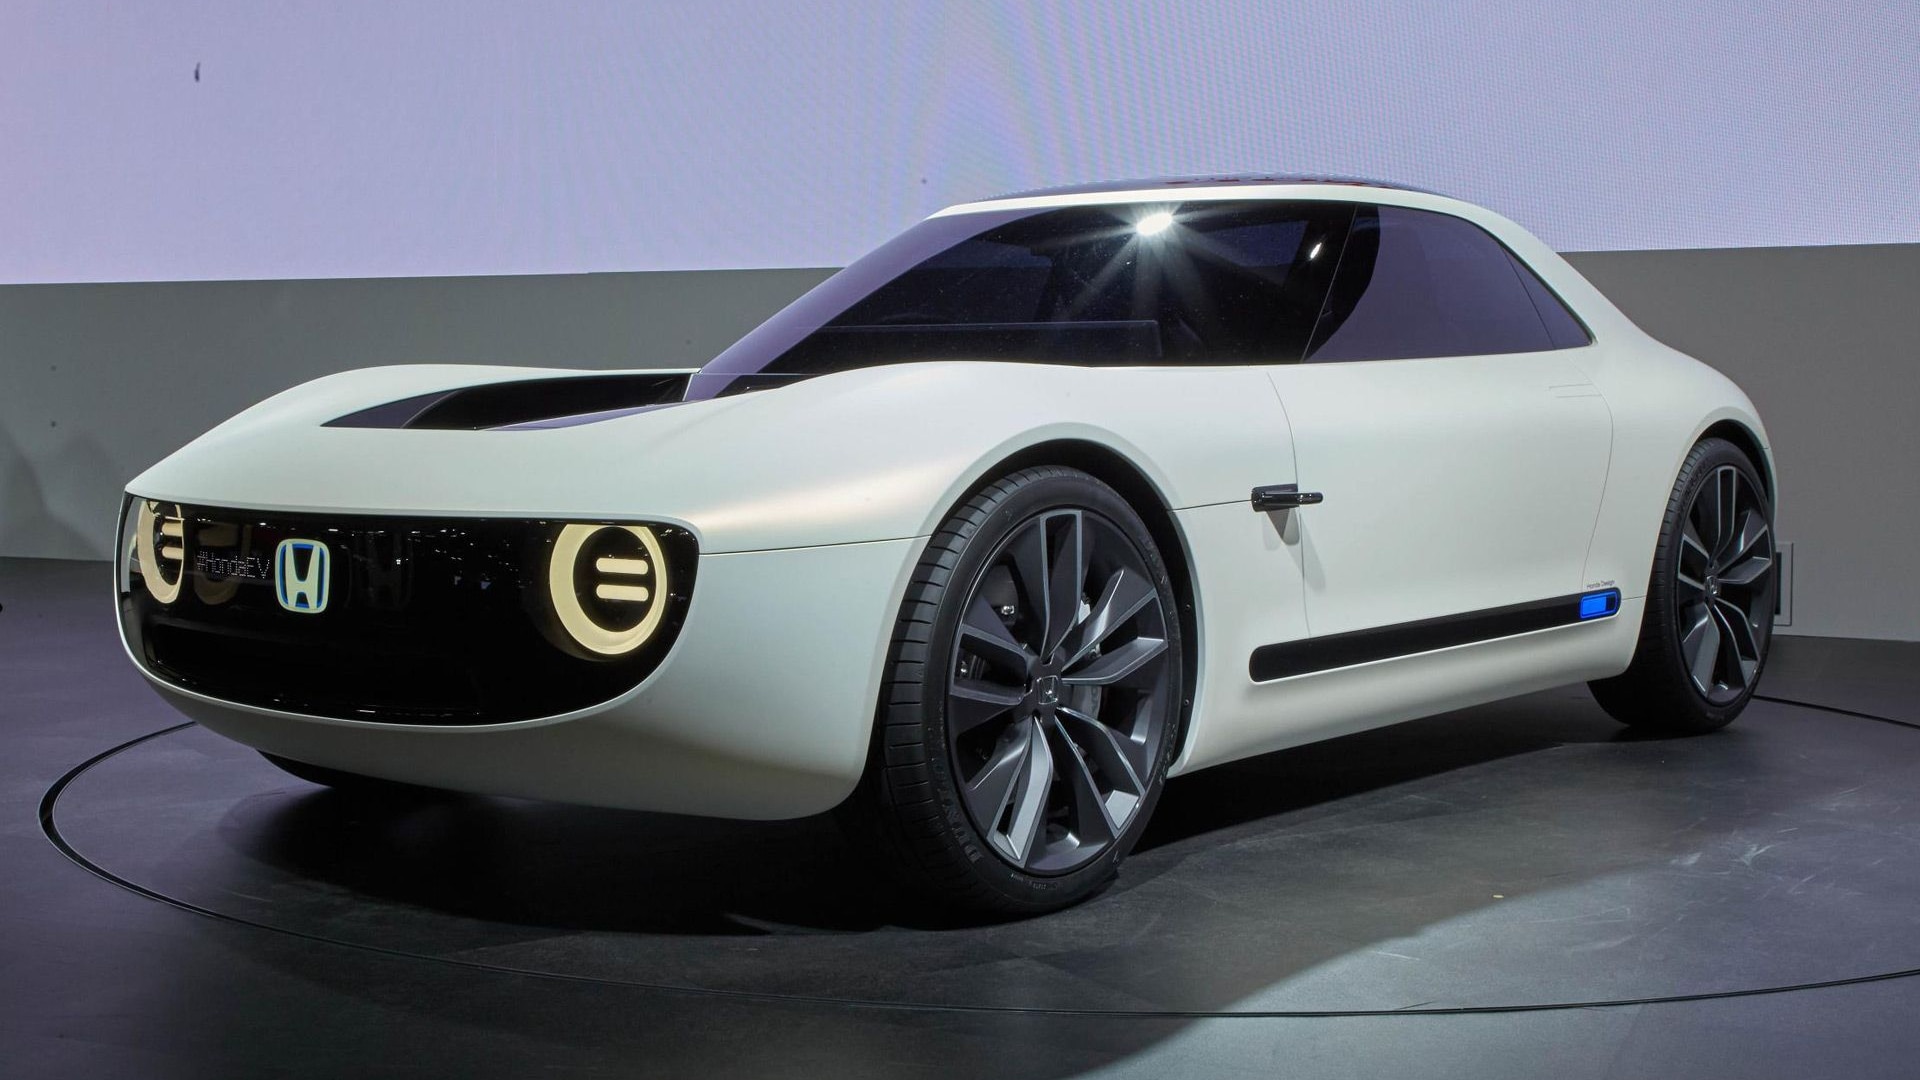  Honda  s second electric car concept  is Sports EV coupe 